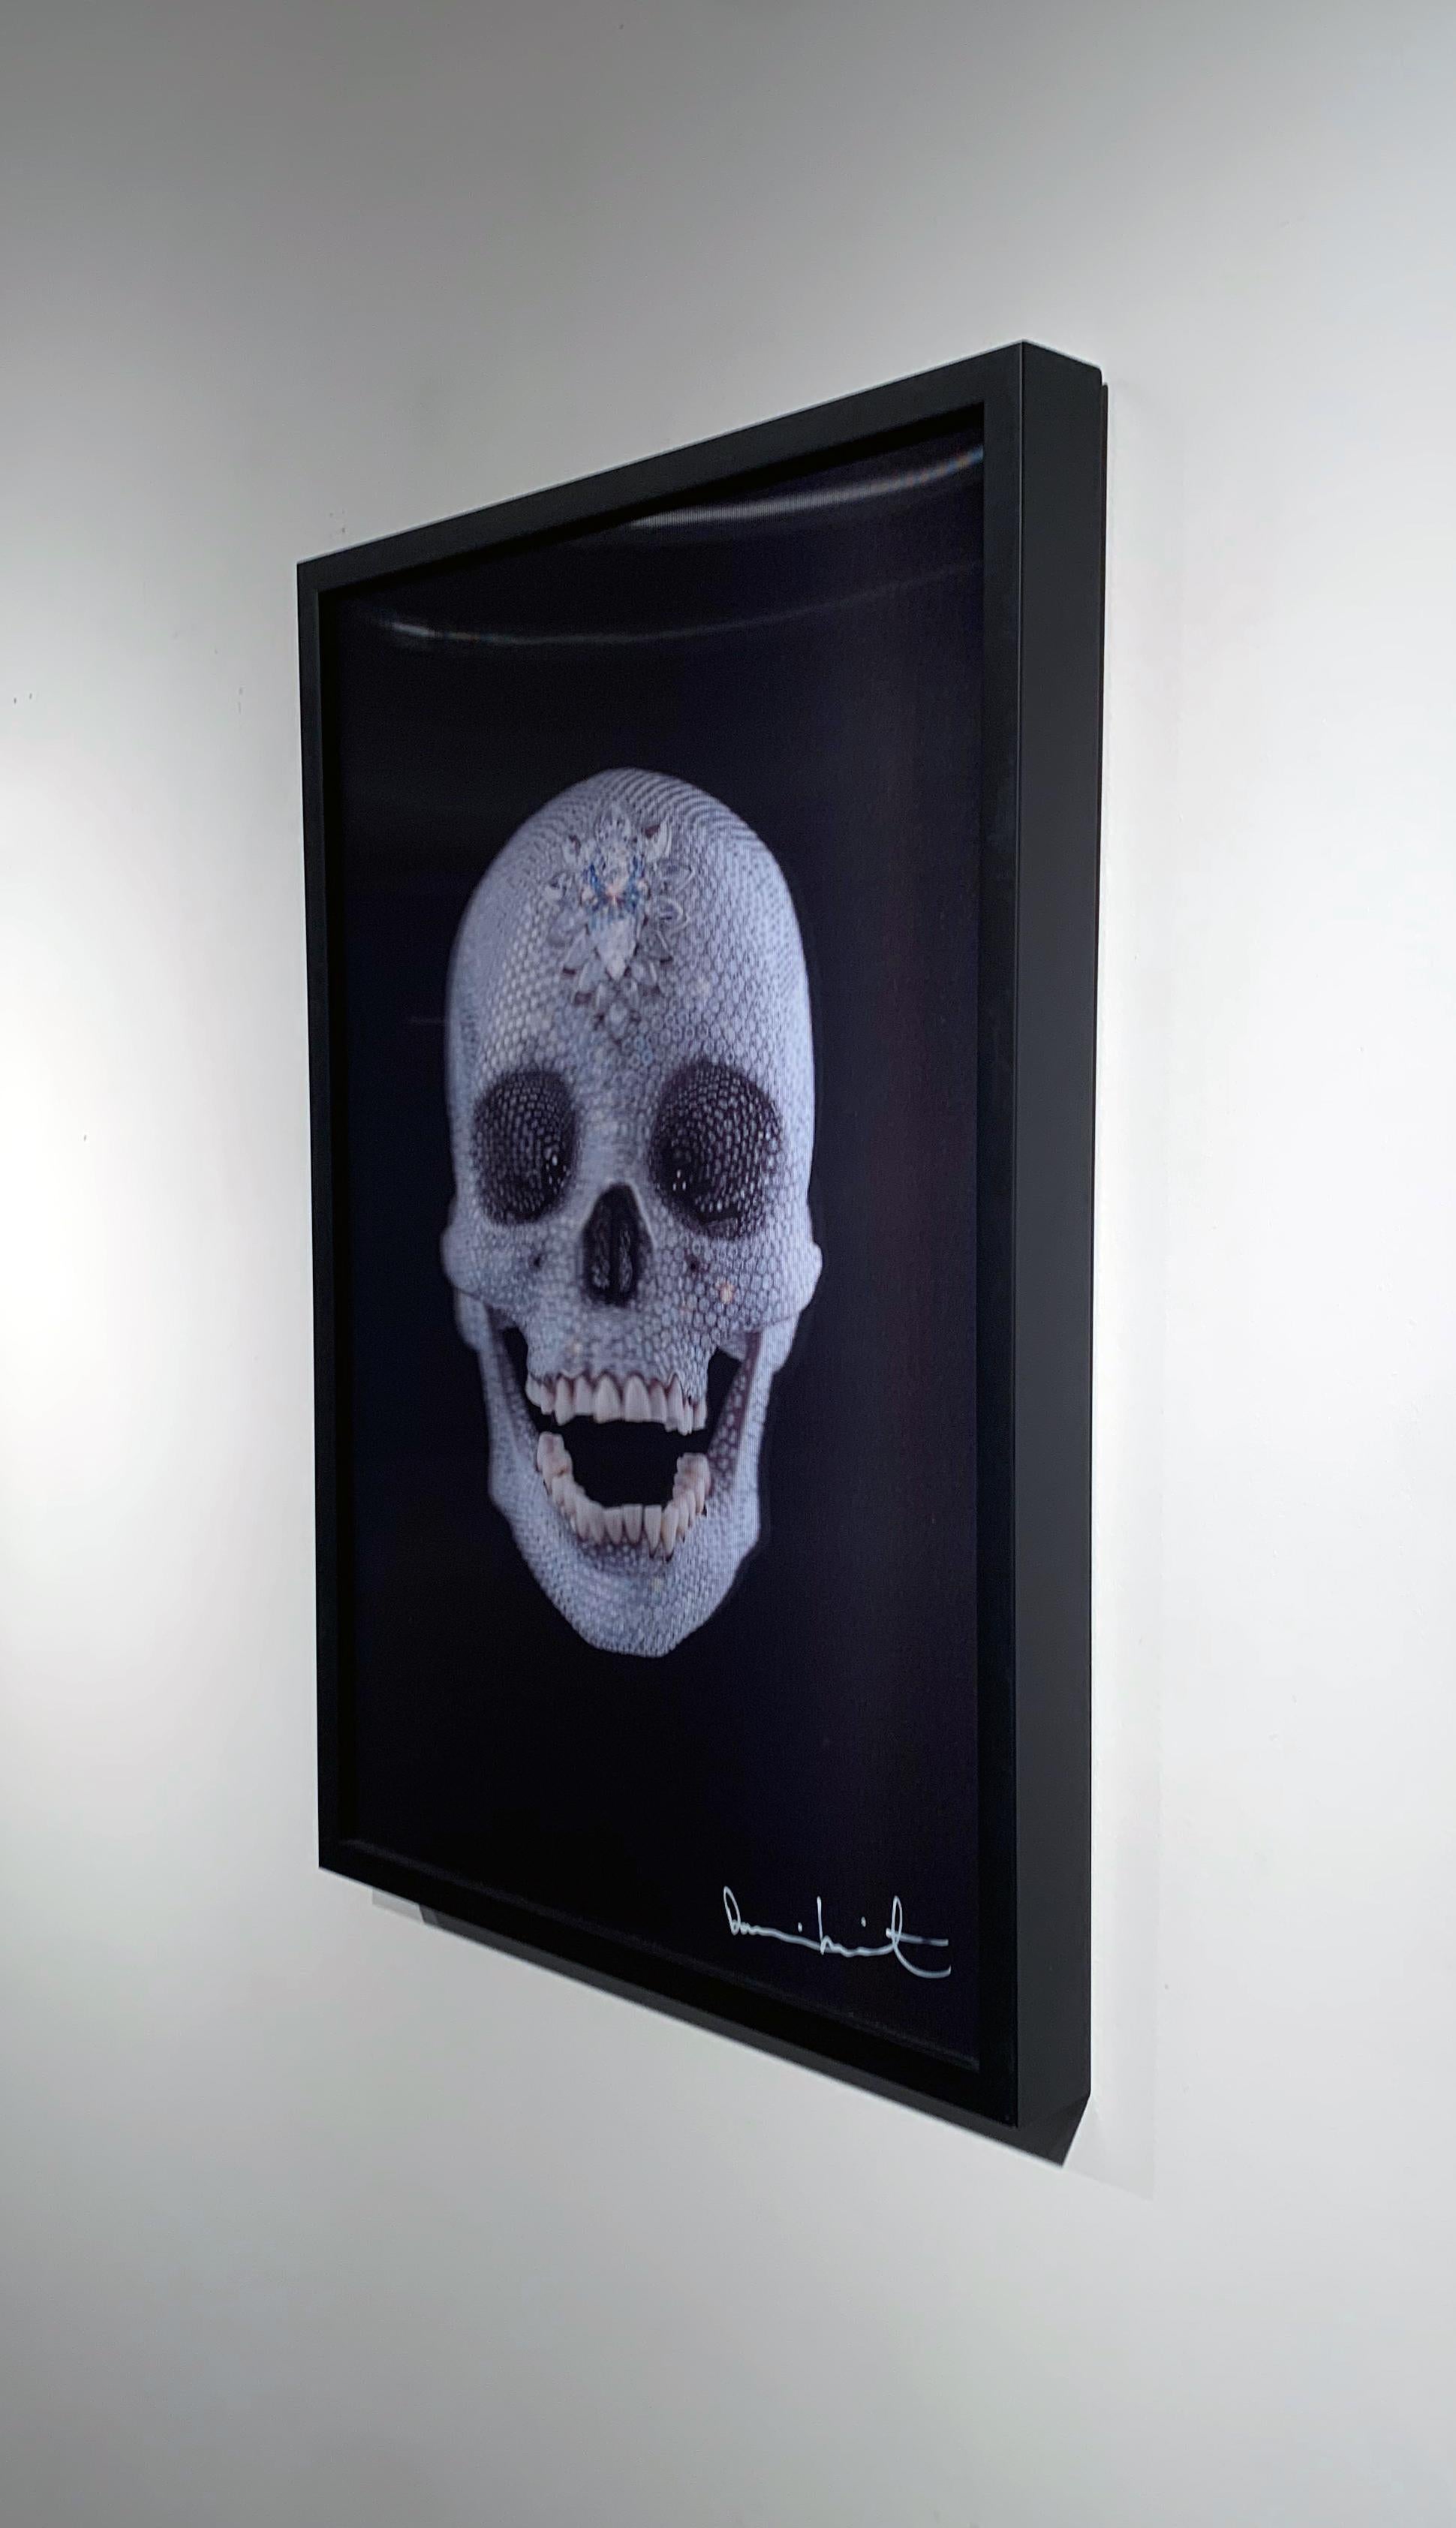 Artist:  Hirst, Damien
Title:  3D Skull (Small)
Date:  2012
Medium:  Digital Print on PETG plastic
Unframed Dimensions:  23.6